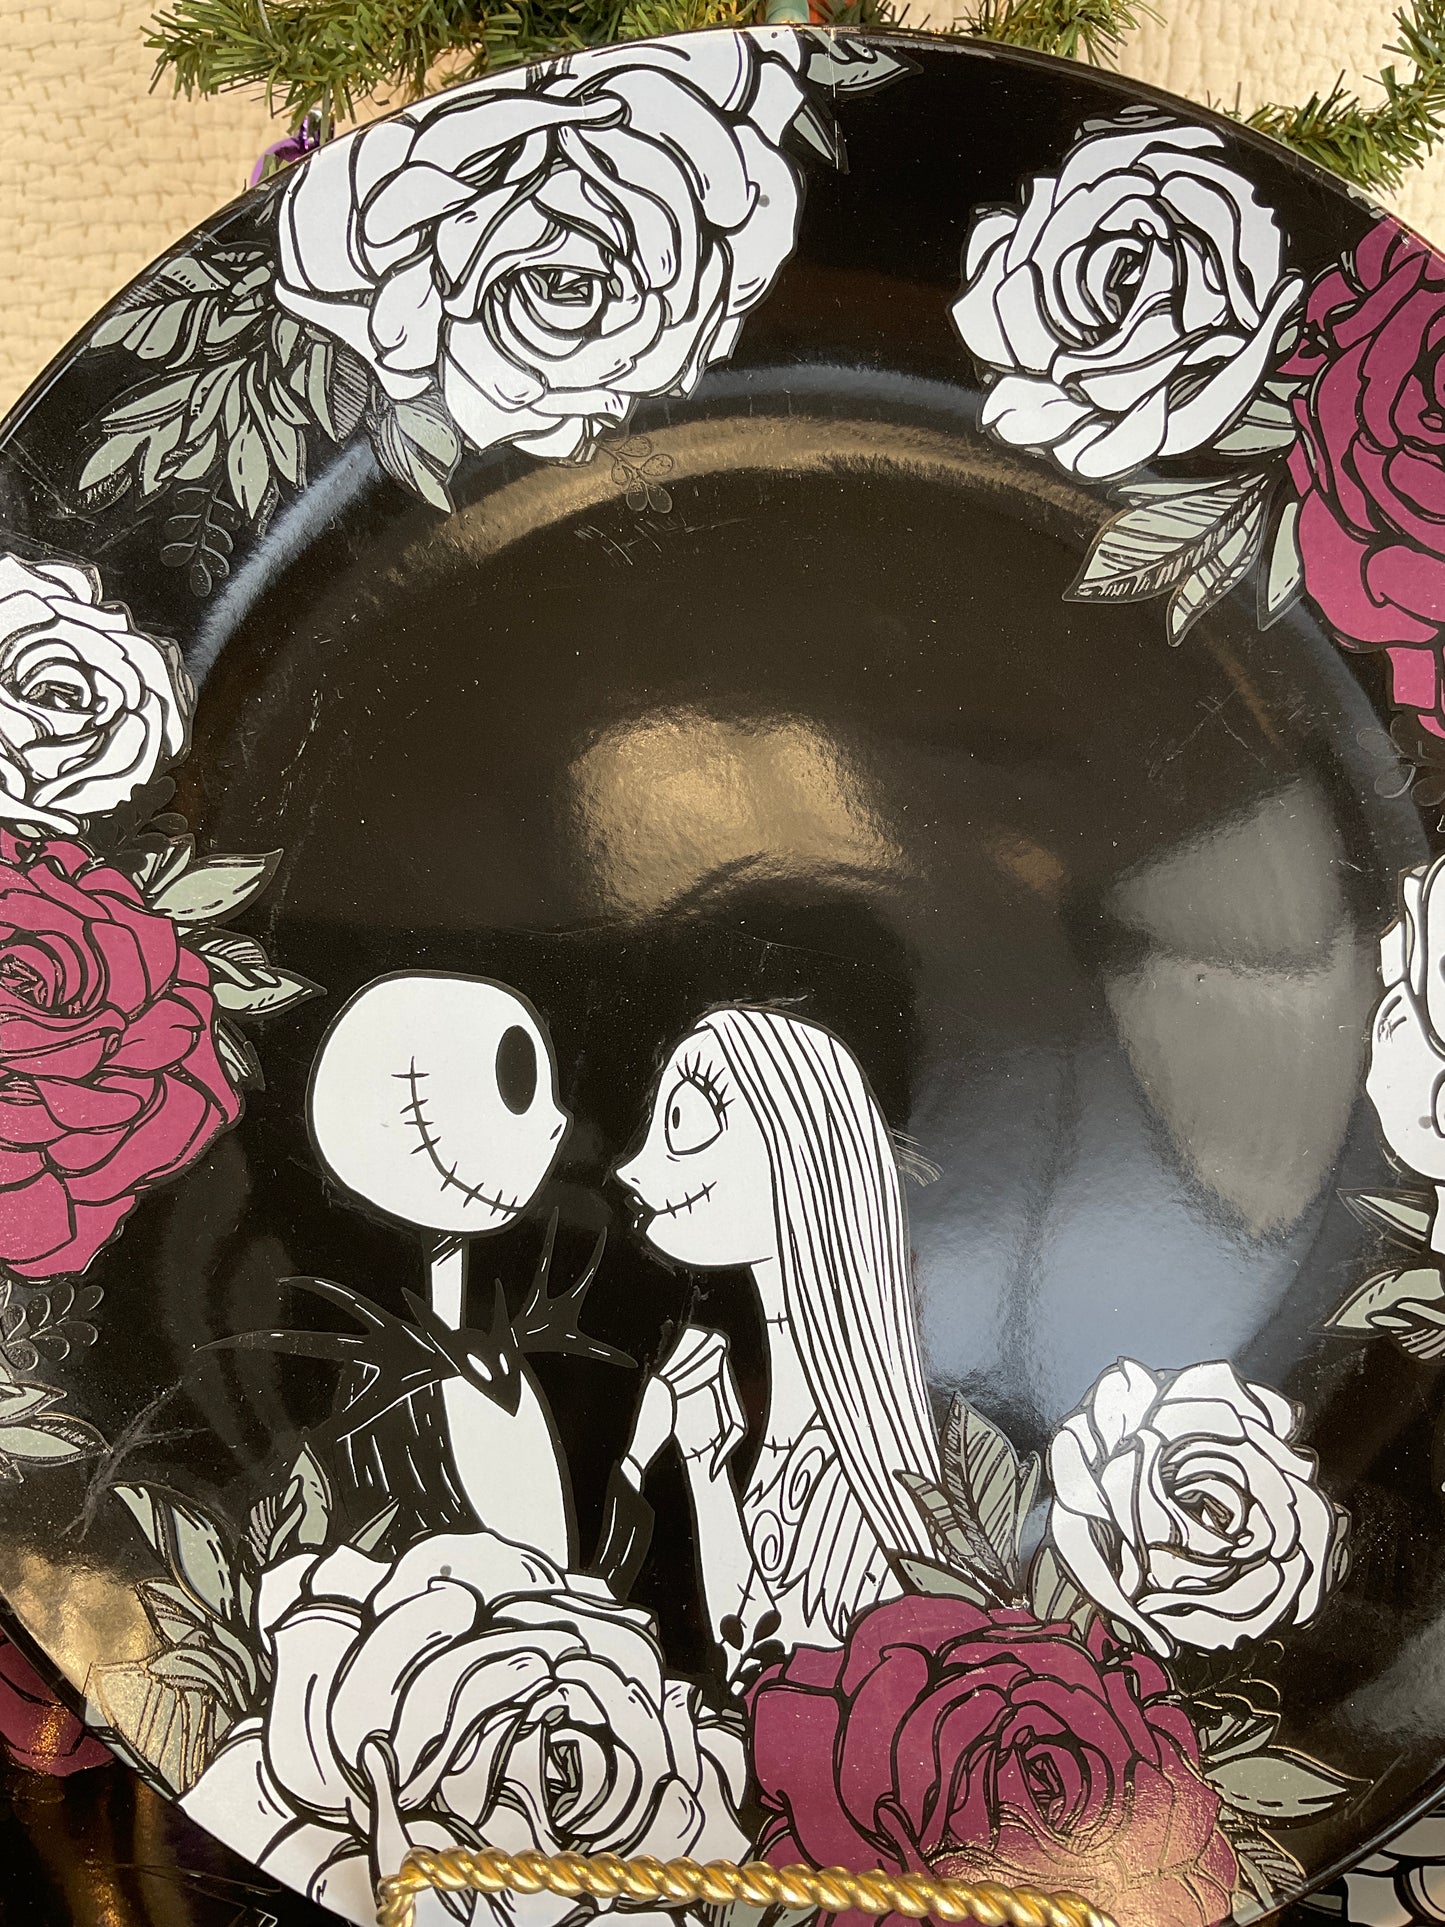 Disney's Nightmare Before Christmas 10.5" Porcelain Plate Set, Black Rose